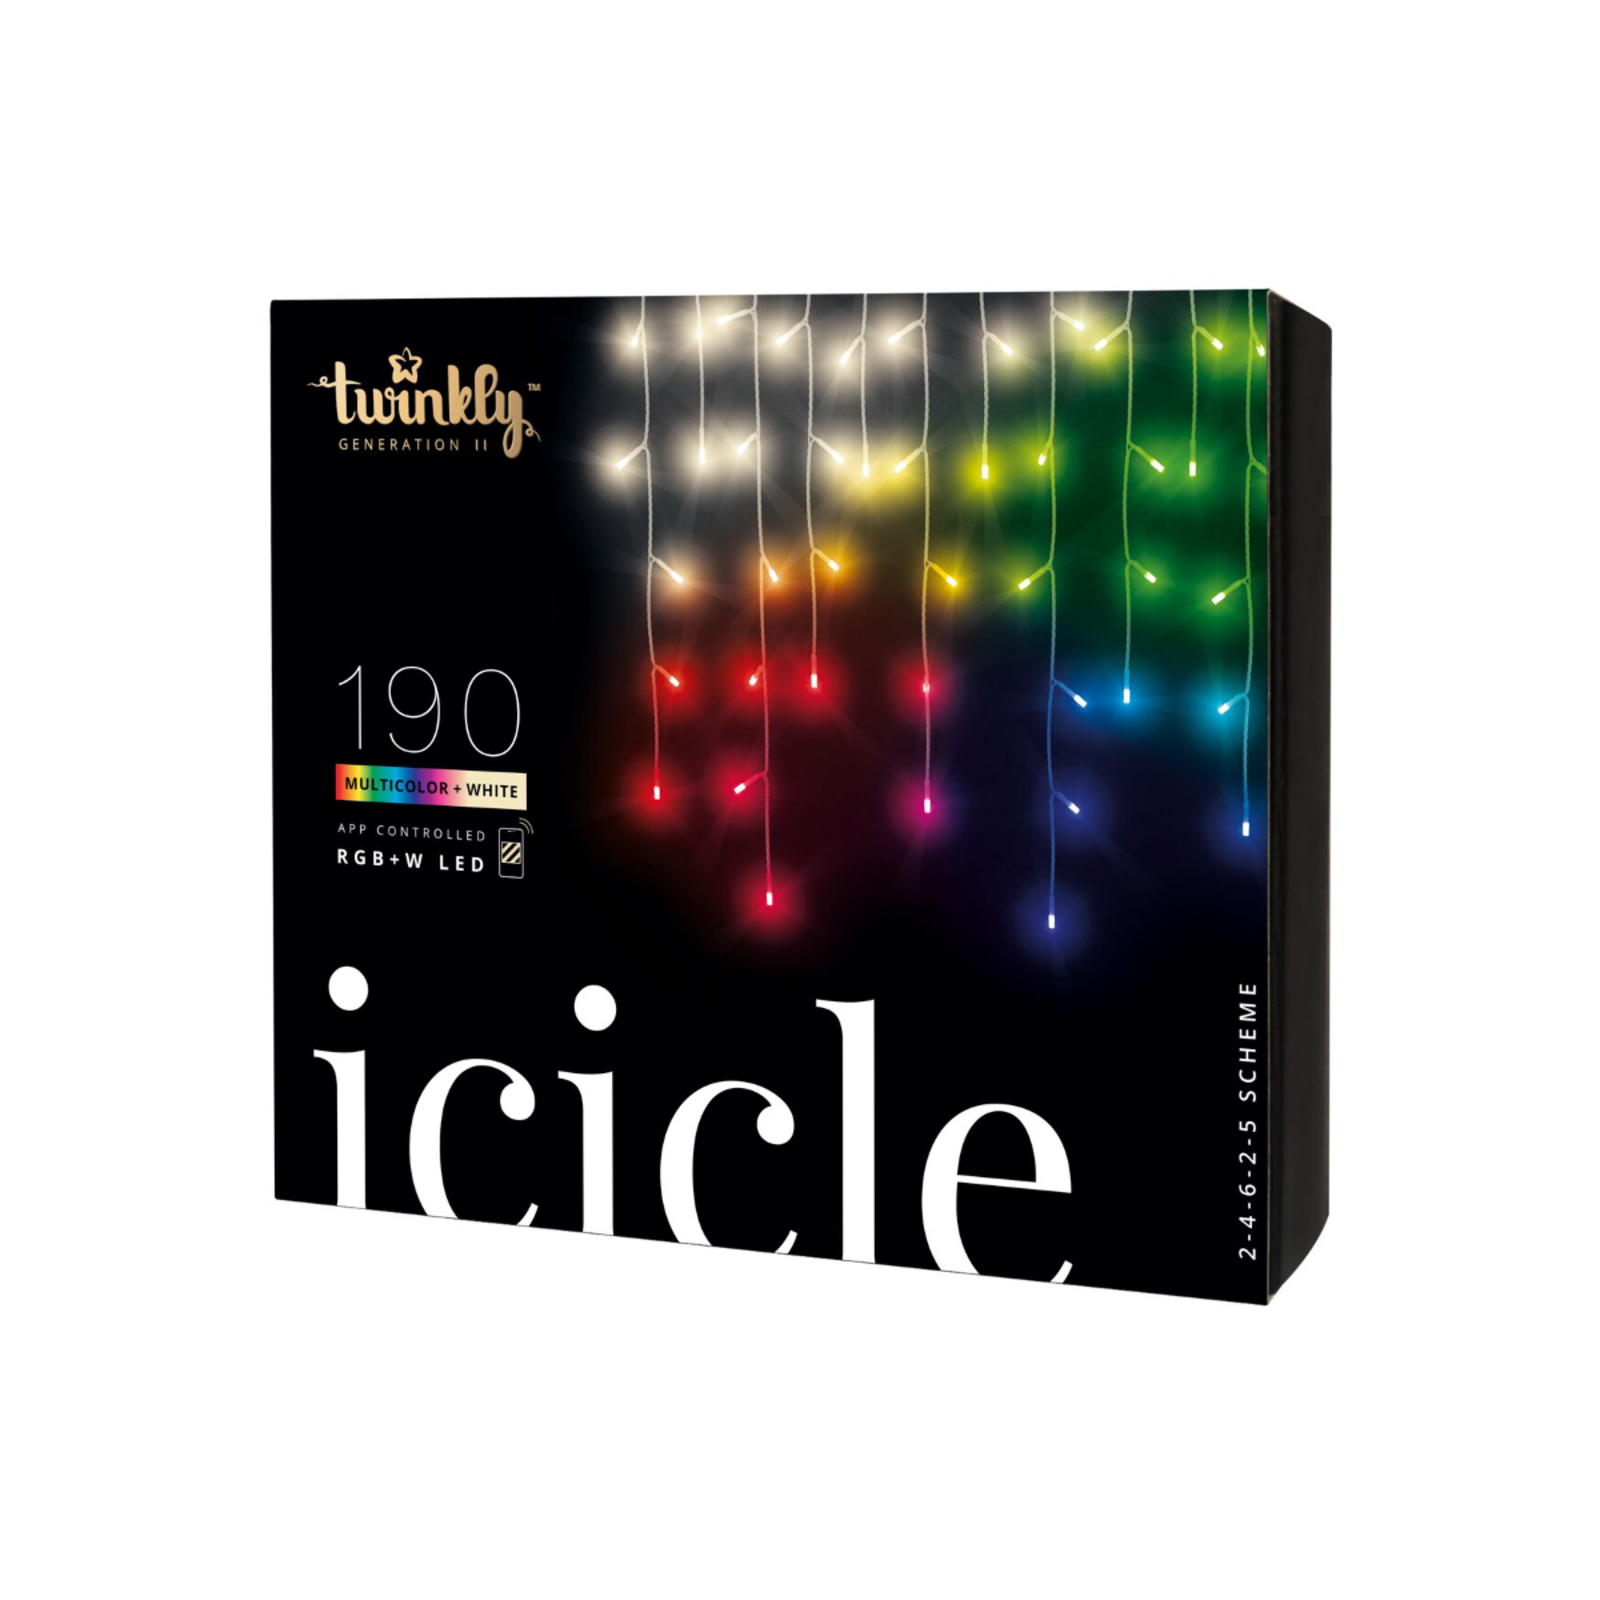 Twinkly Icicle LED curtain light RGBW, 190 LEDs